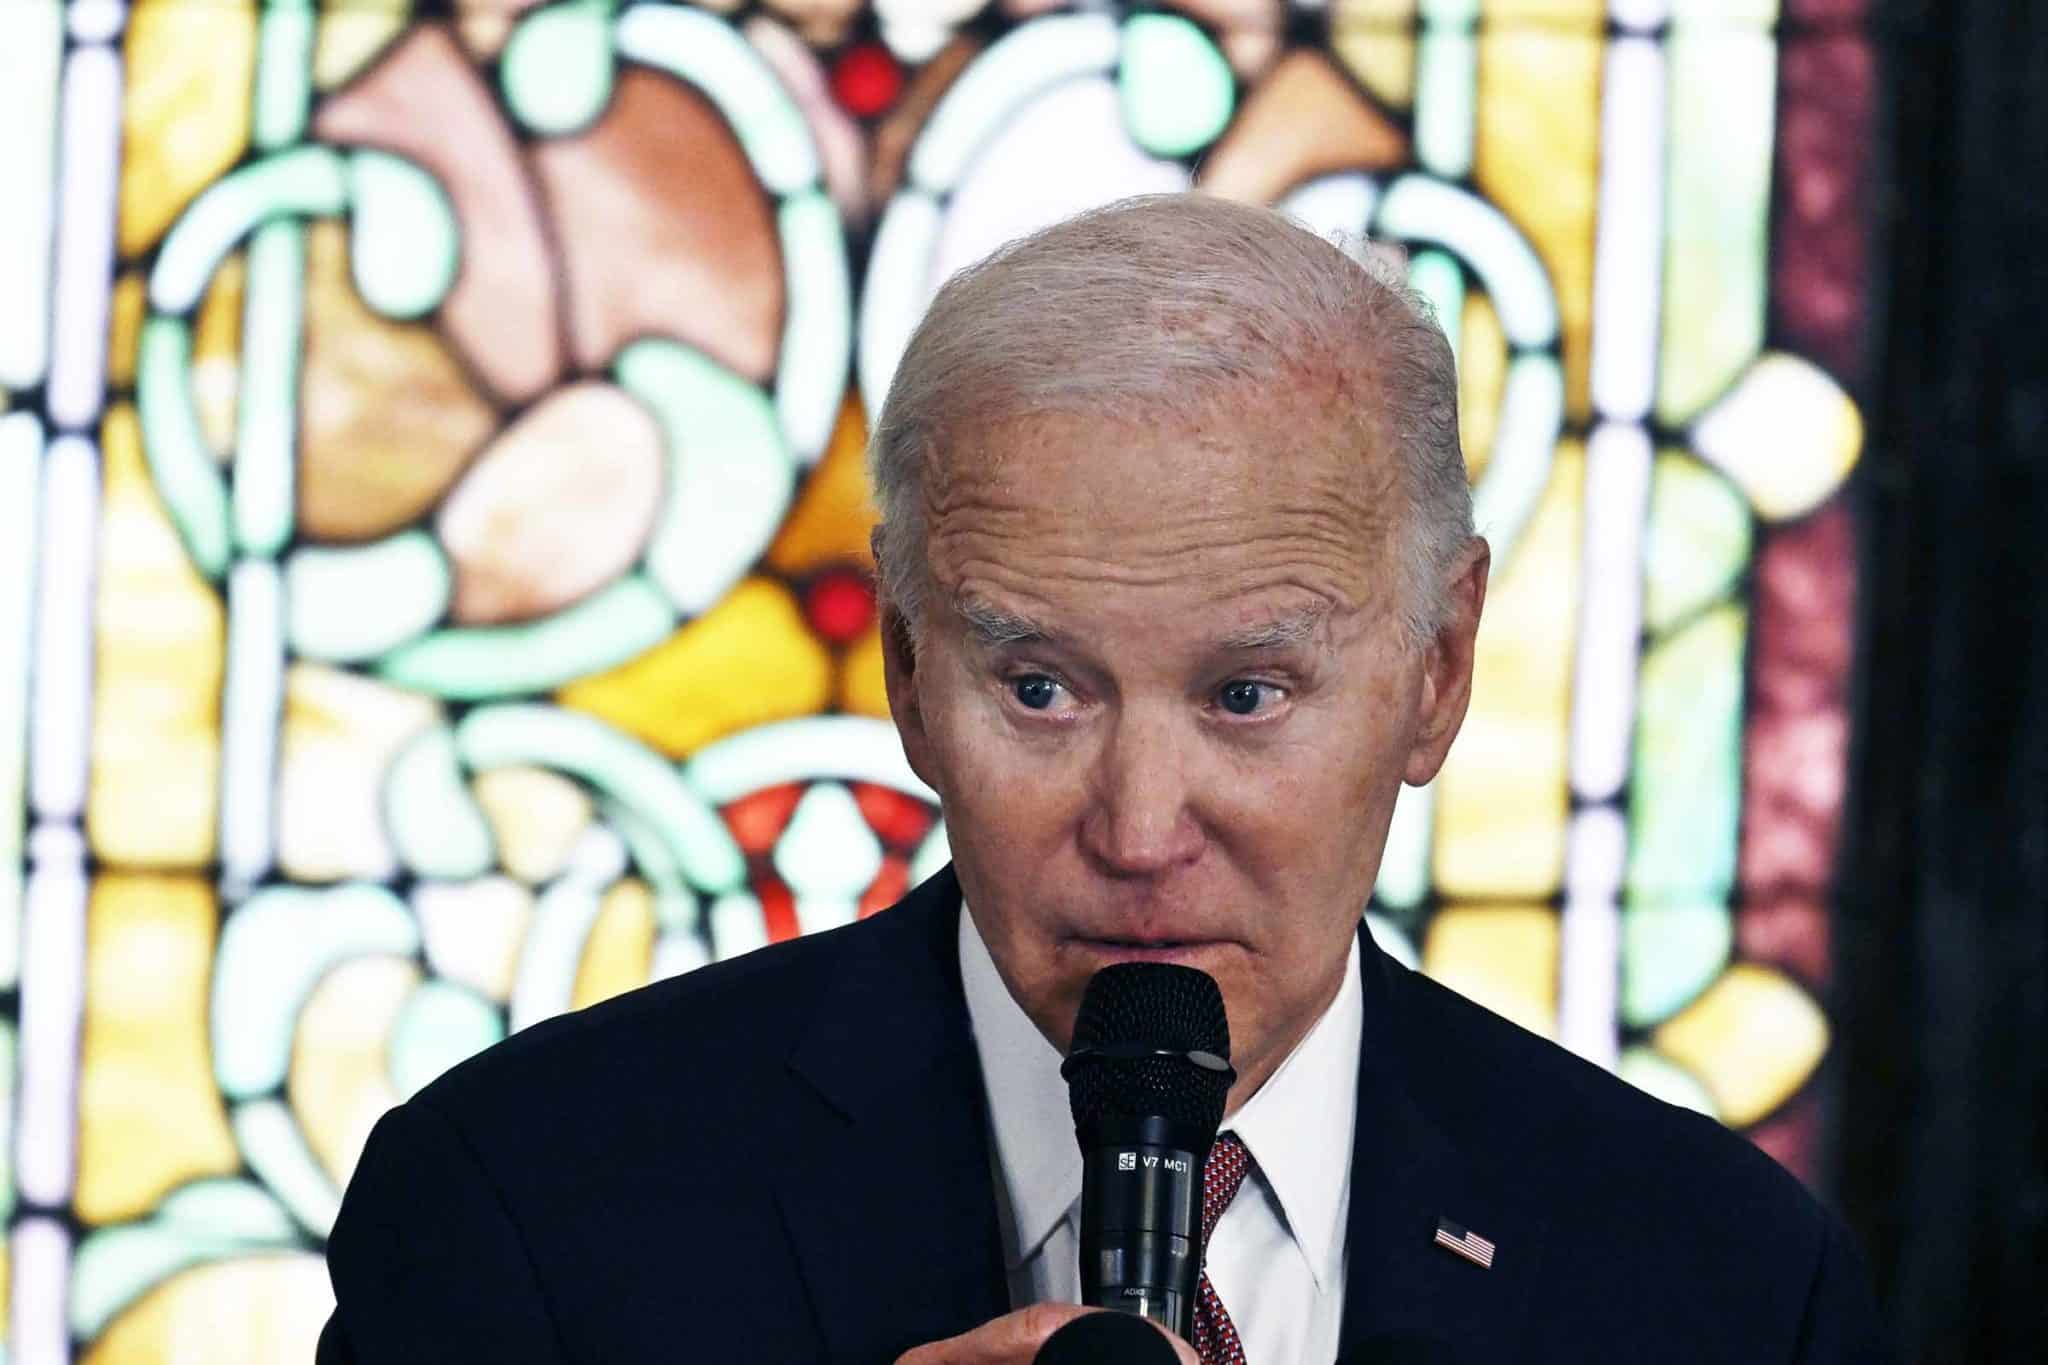 Joe Biden speaks at Mother Emanuel AME Church